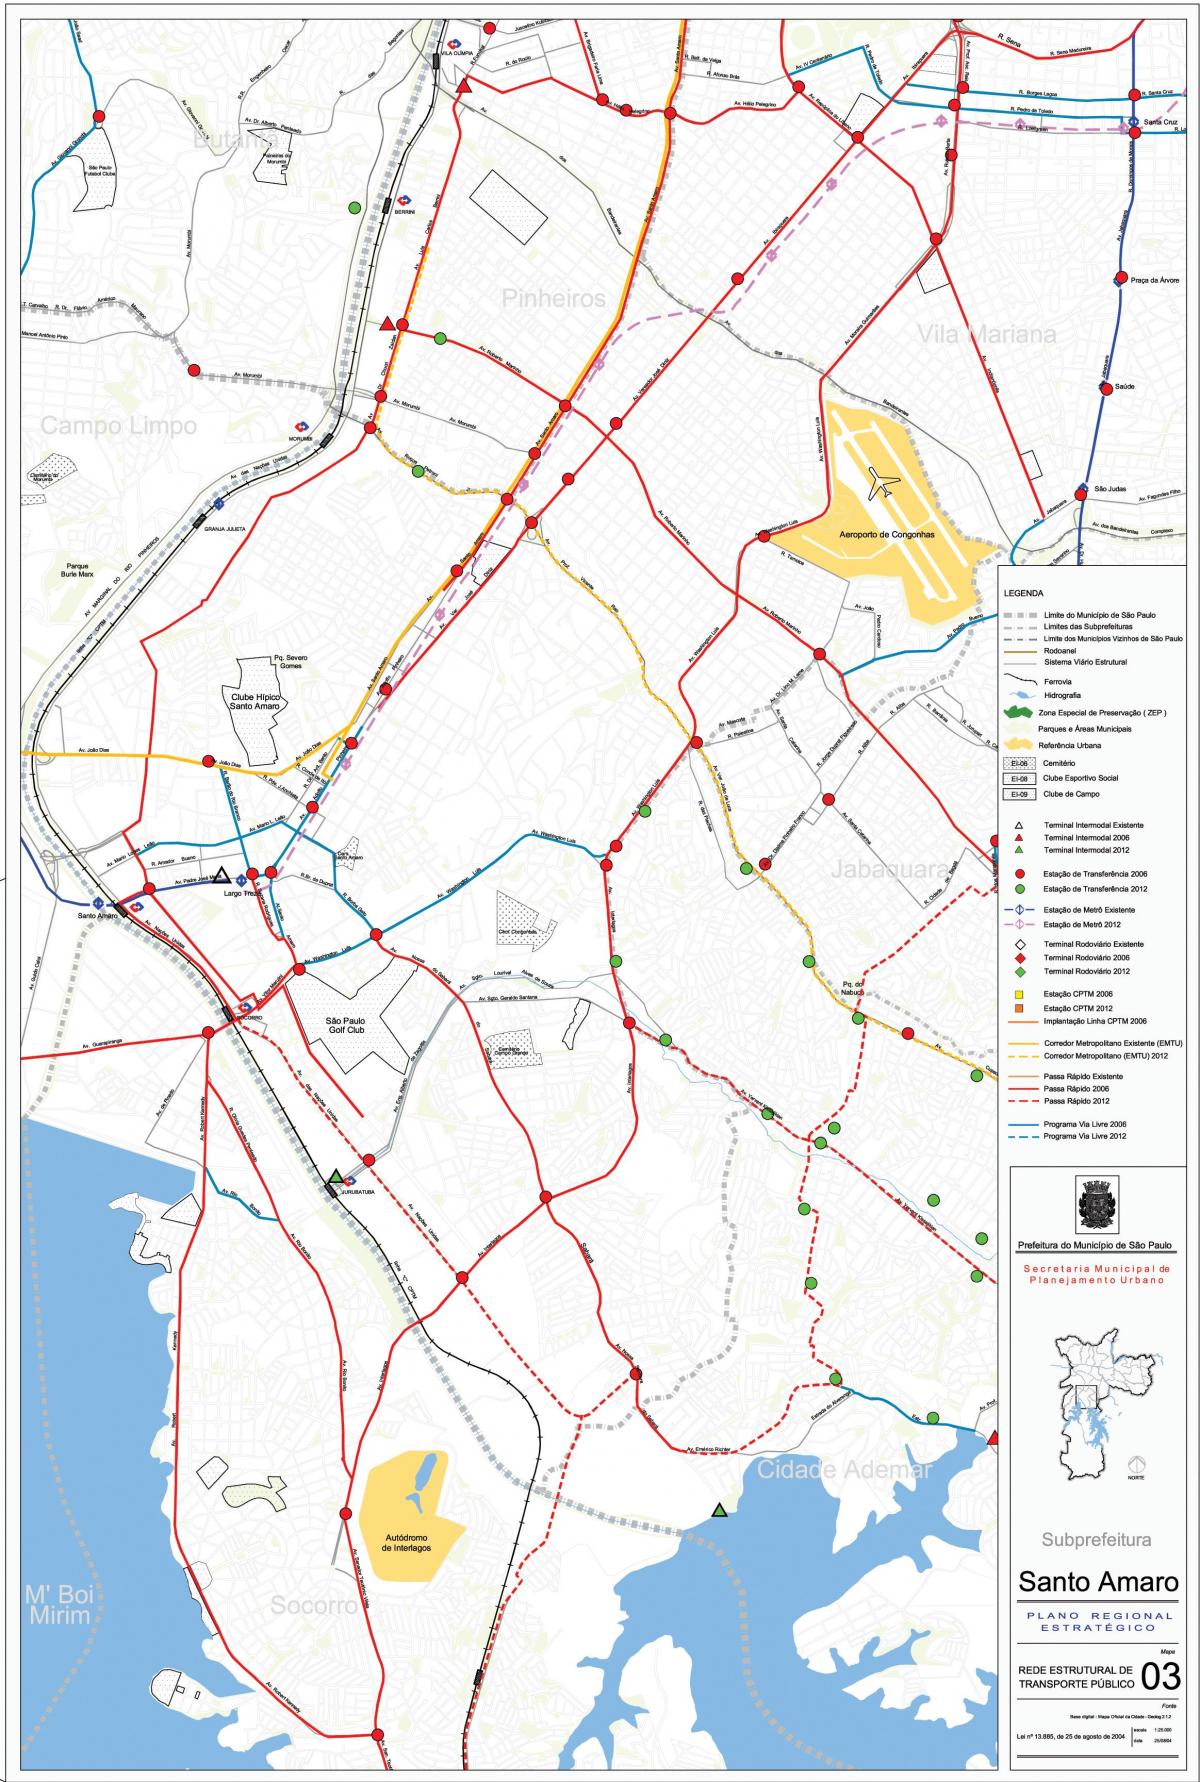 Kaart van Santo Amaro São Paulo - het Openbaar vervoer